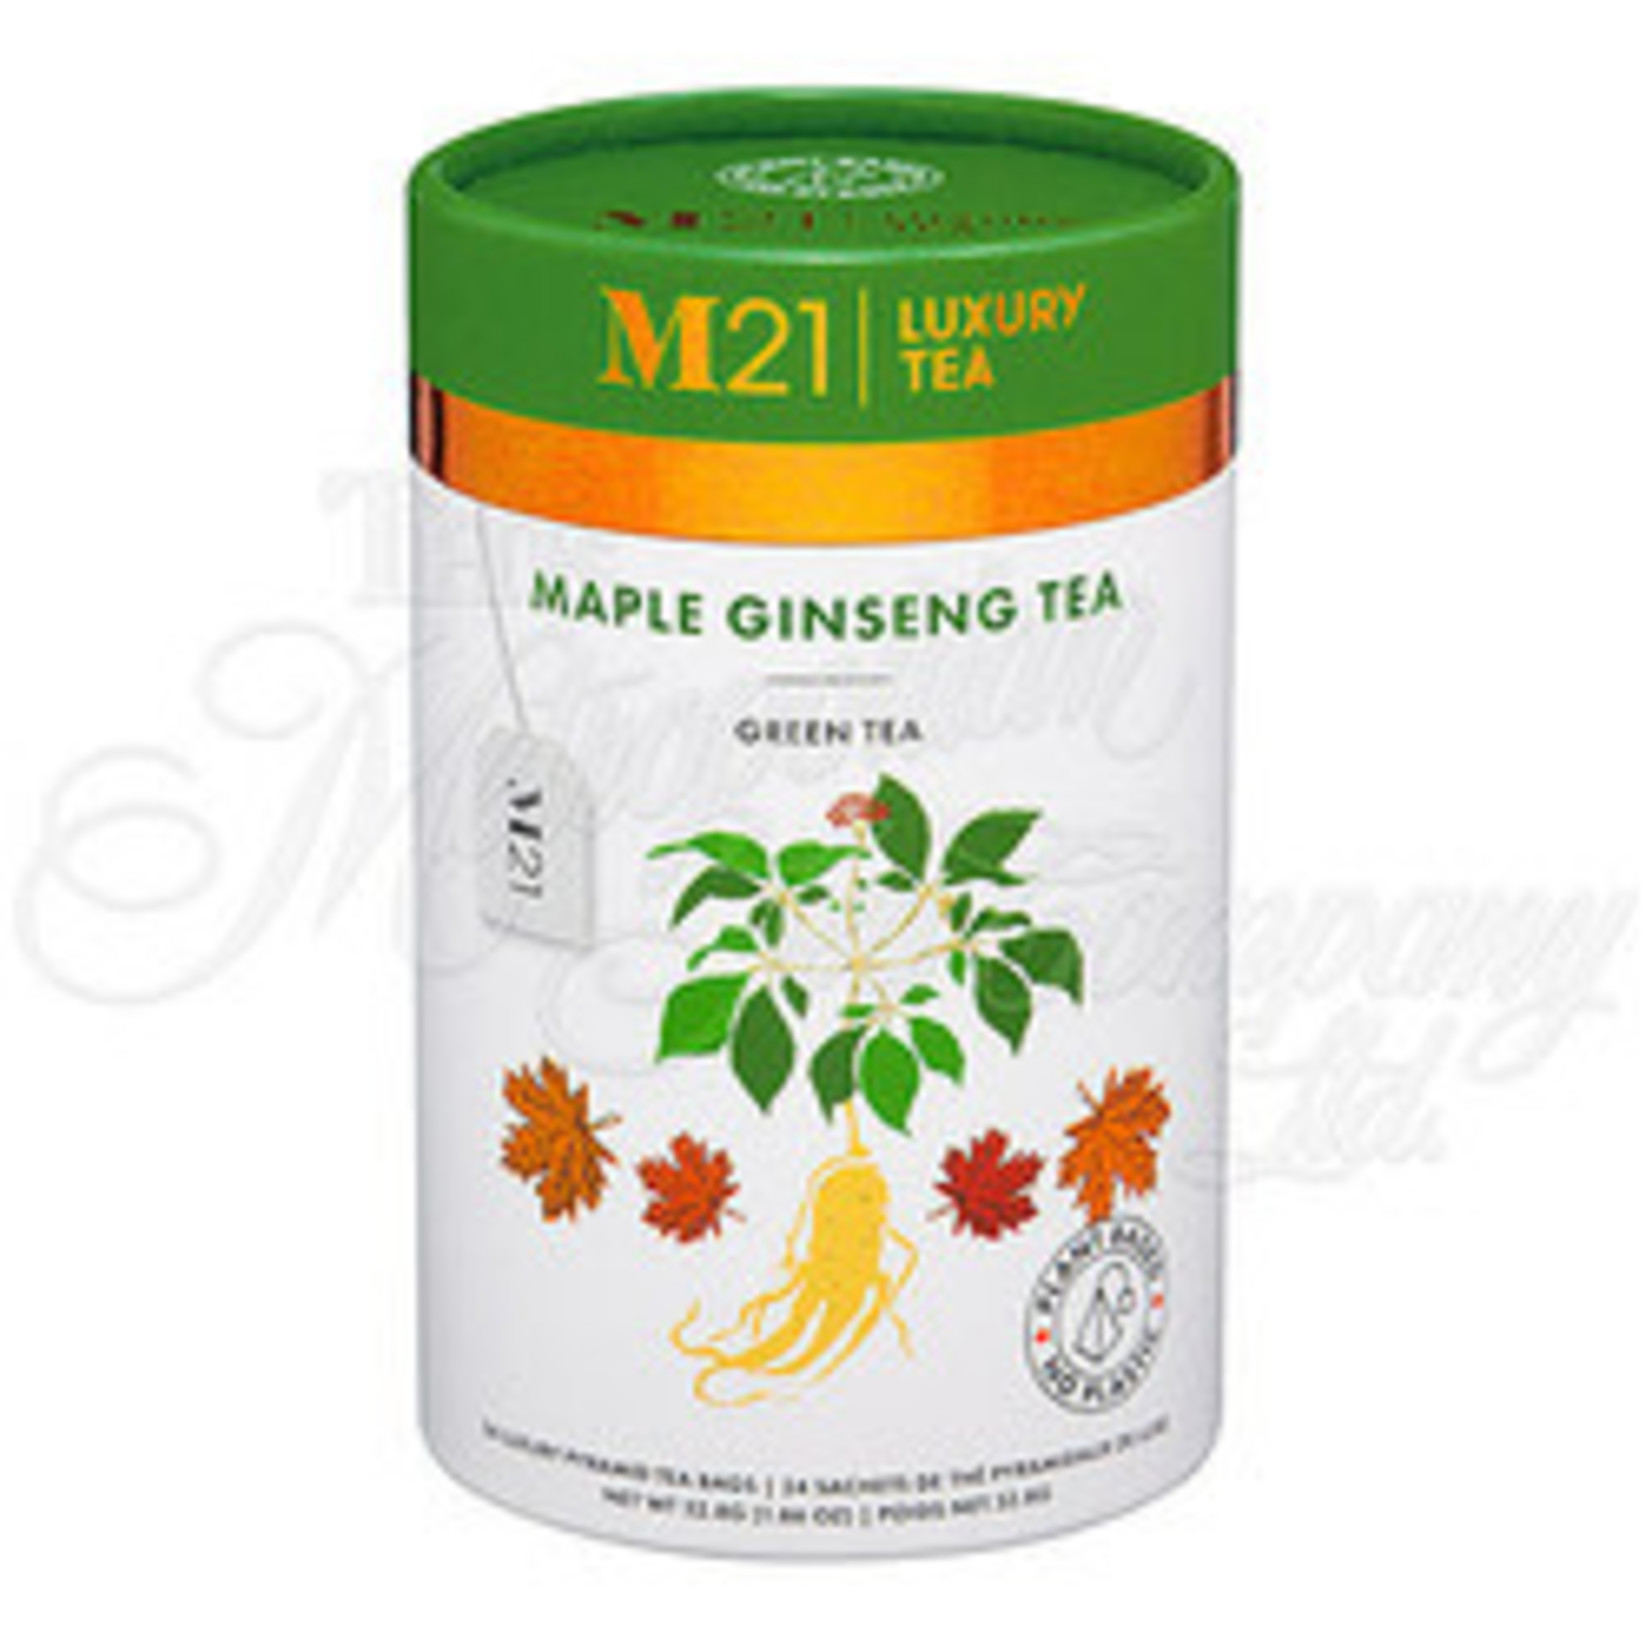 METROPOLITAN TEA METROPOLITAN TEA GINSENG MAPLE GREEN TEA (M21) 24 BAGS